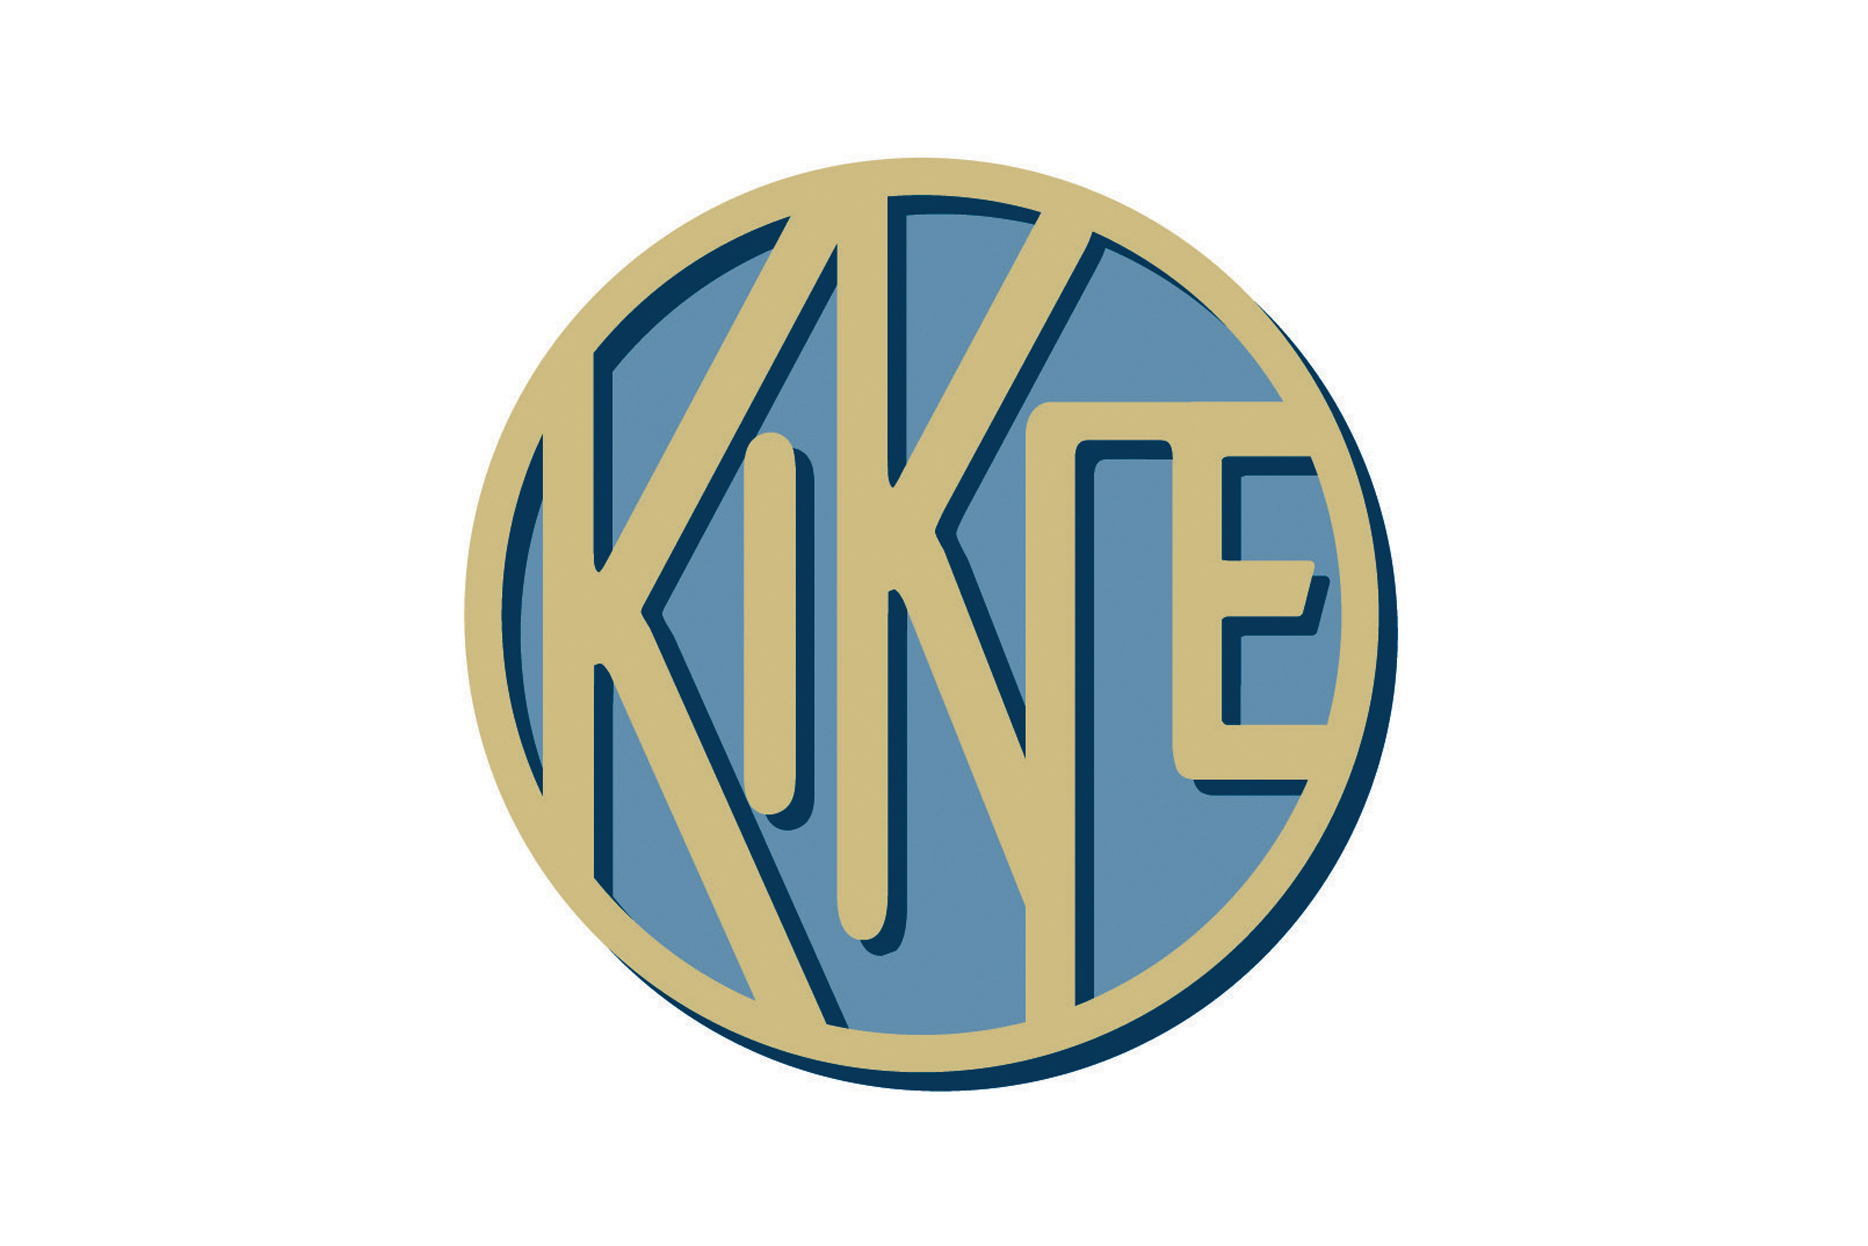 KIKPE logo